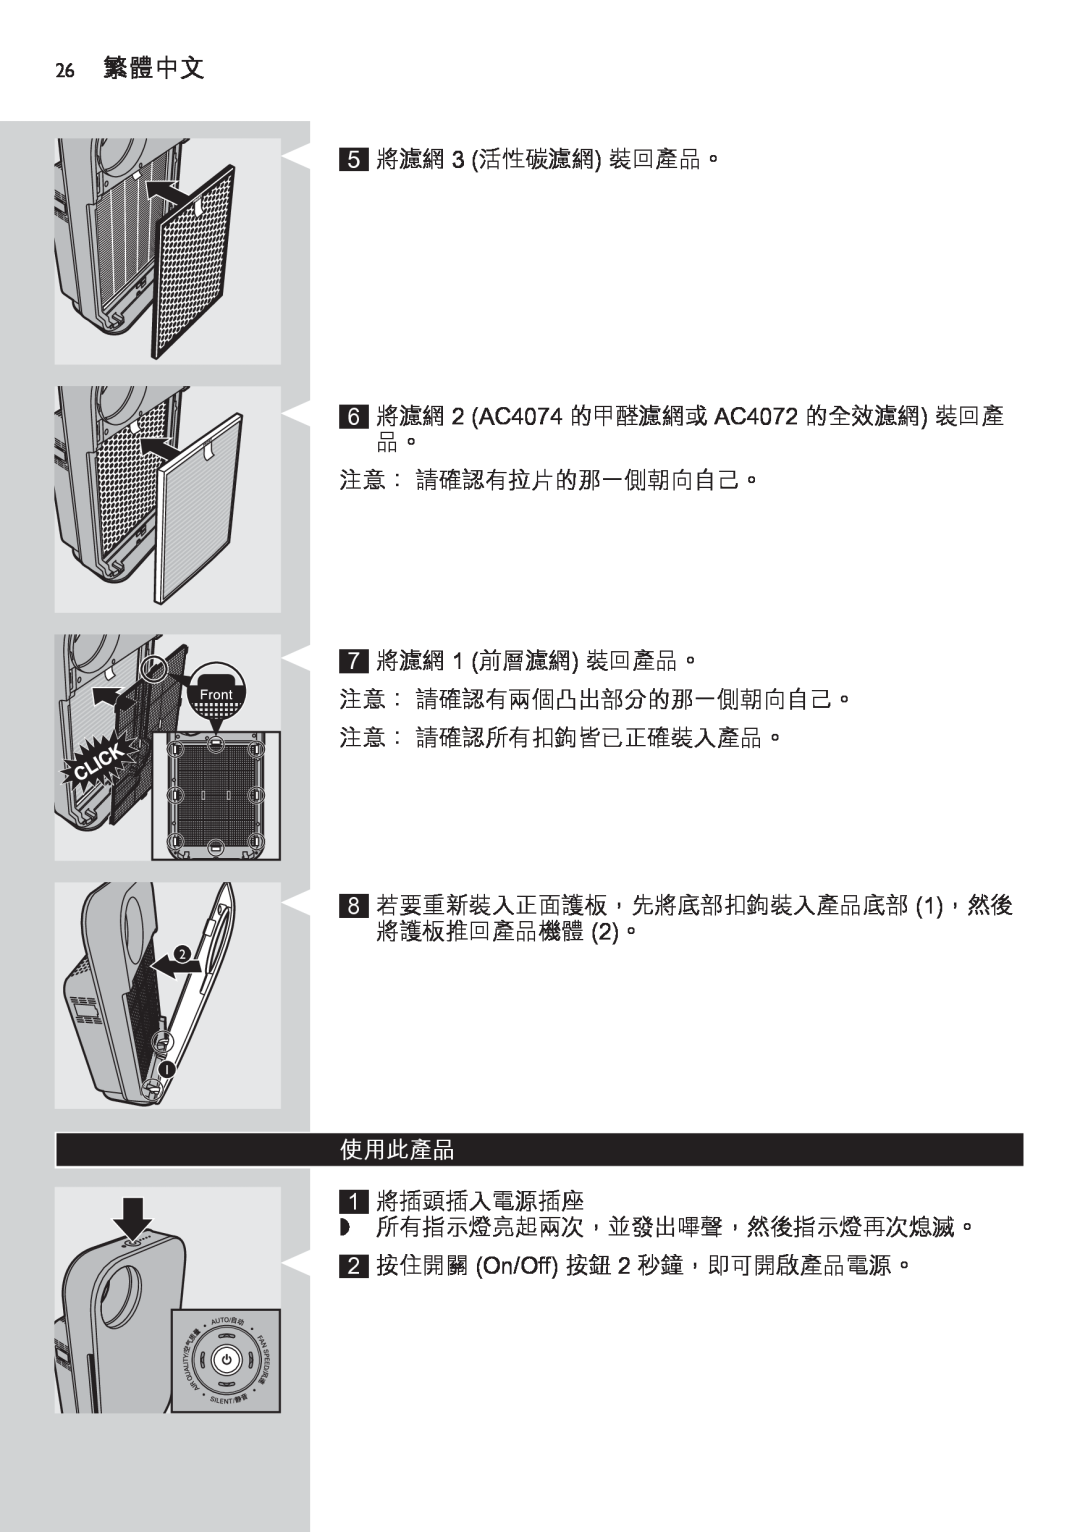 Philips AC4074 manual 26繁體中文, 使用此產品 